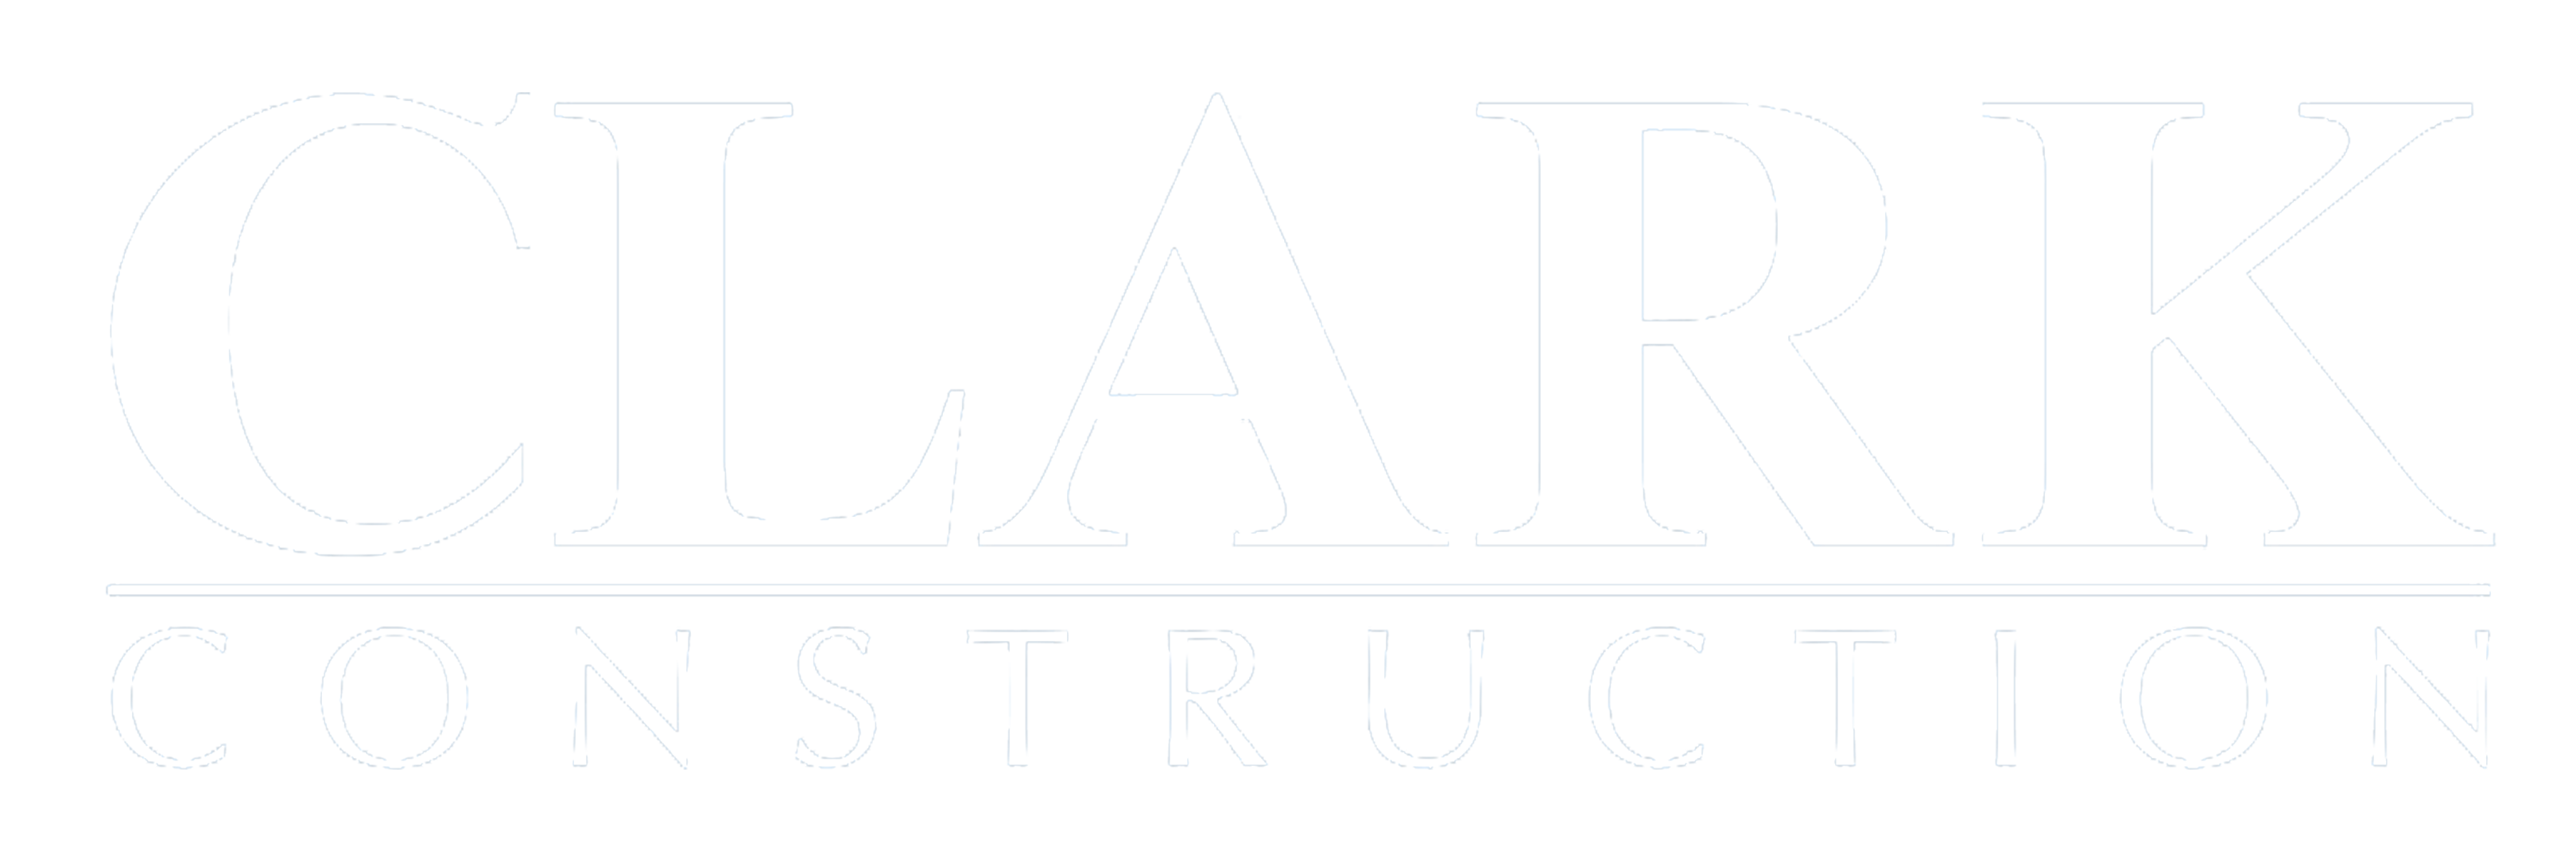 Clark Construction Logo